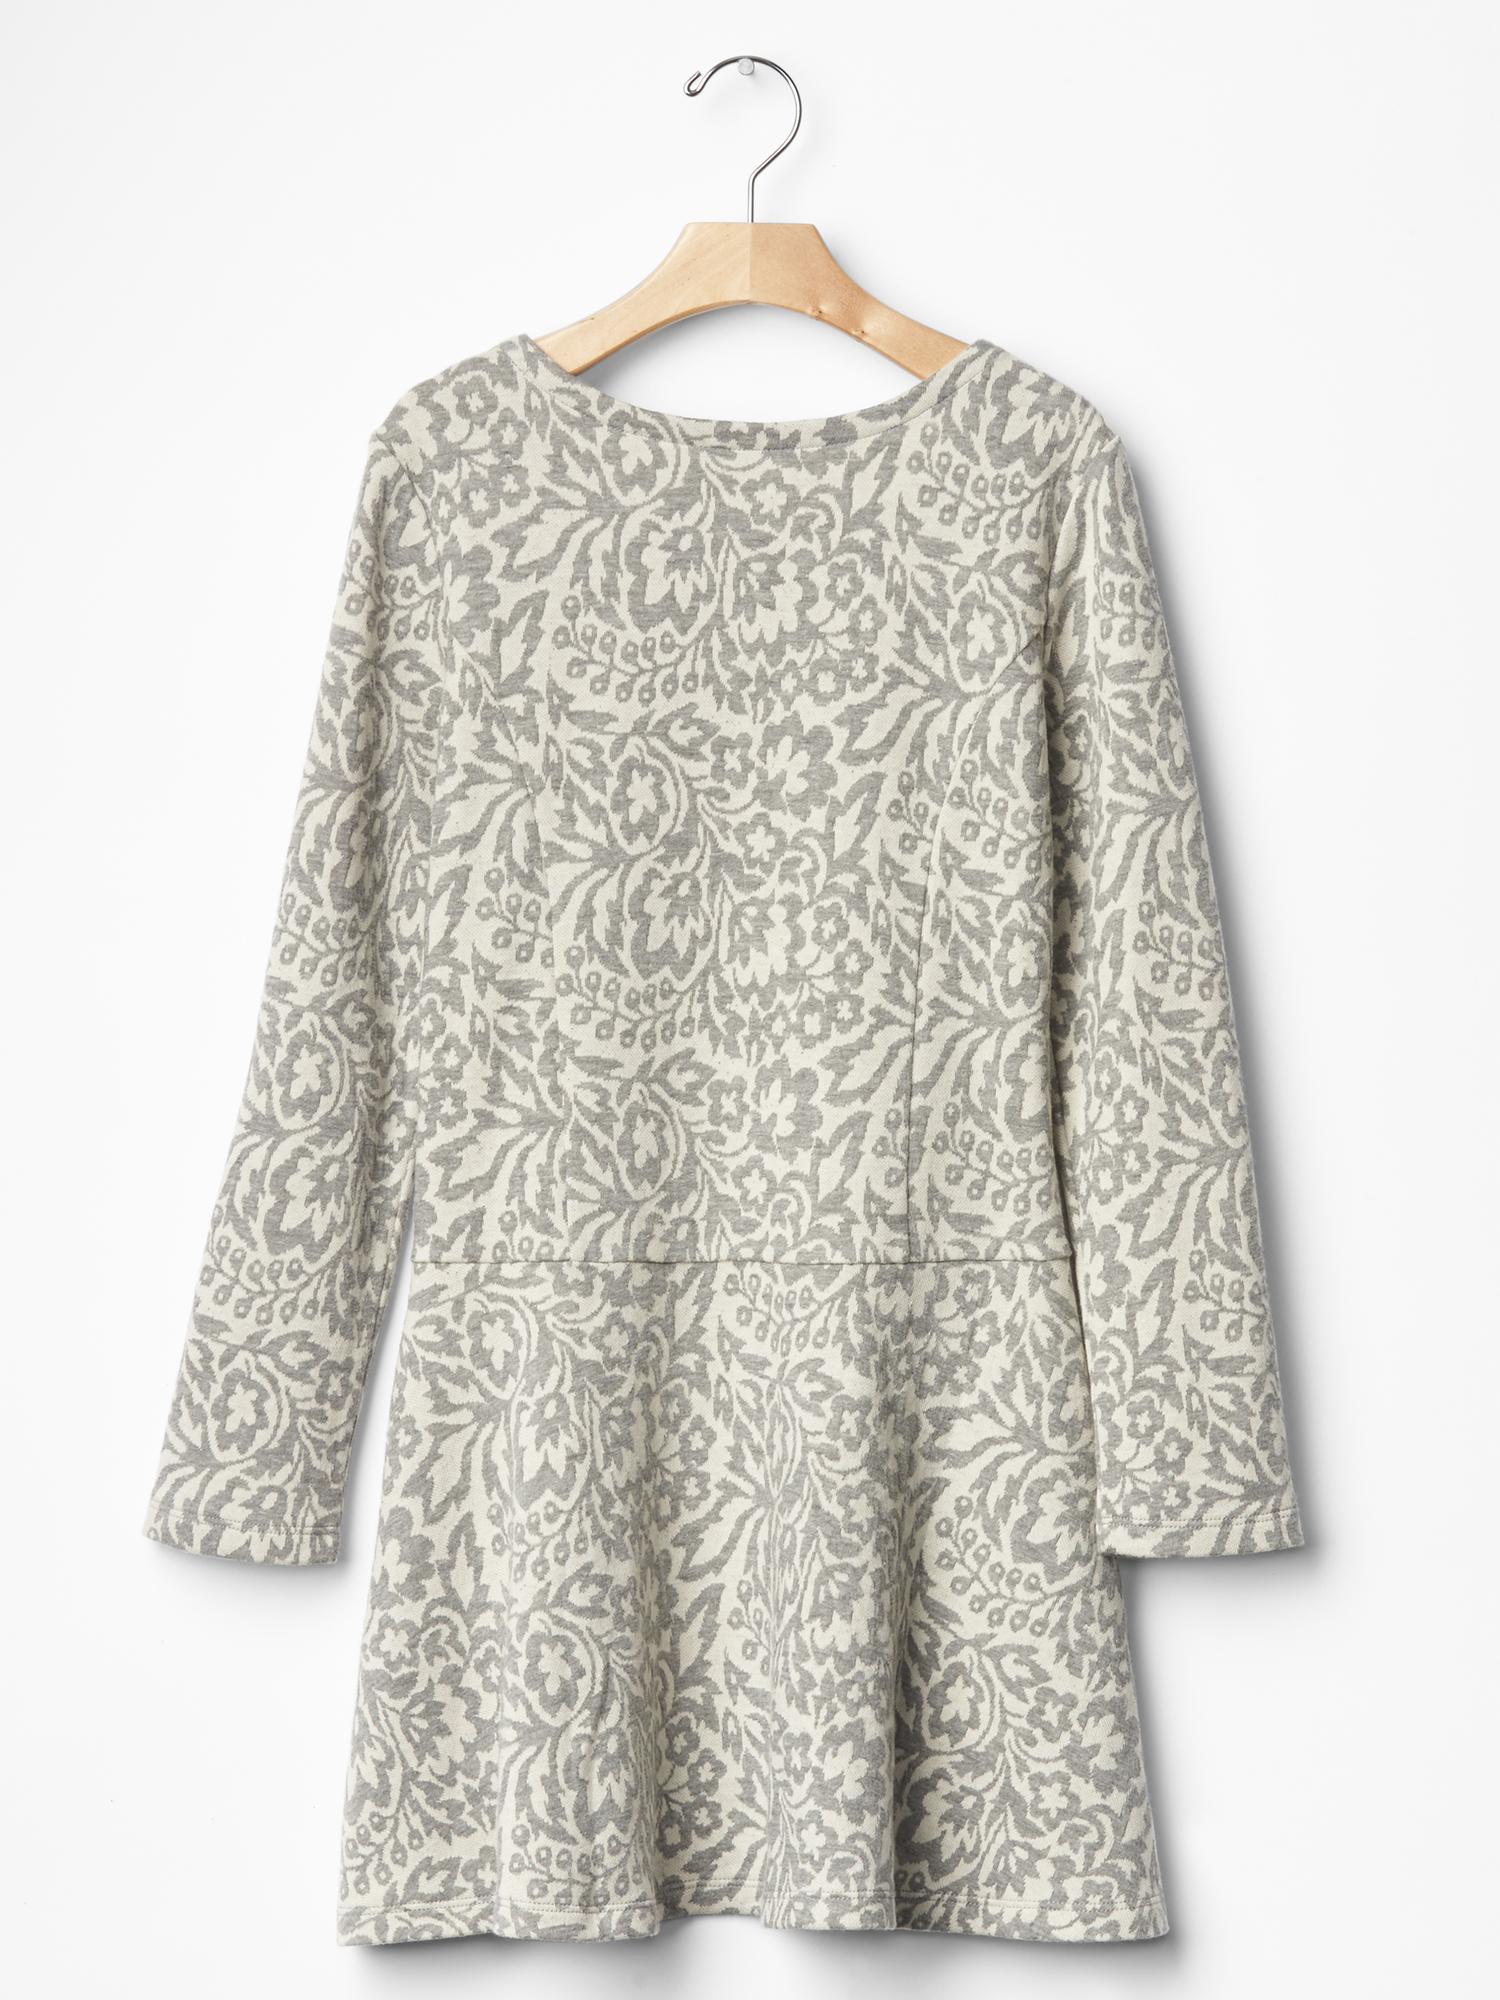 Jacquard paisley dress | Gap